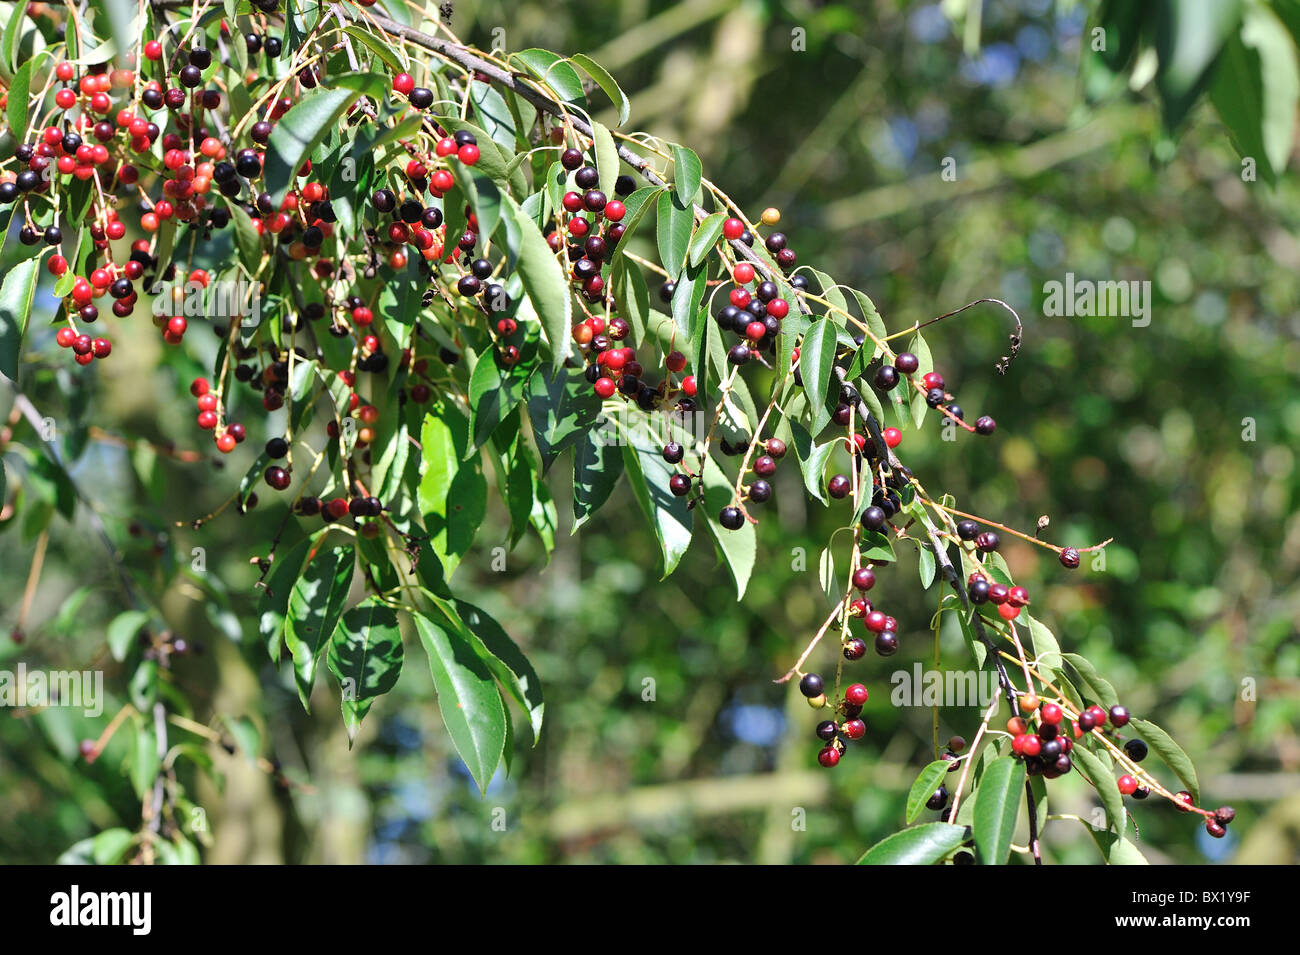 Black cherry - Wild black cherry (Prunus serotina) fruits - drupes in autumn - Louvain-La-Neuve - Belgium Stock Photo